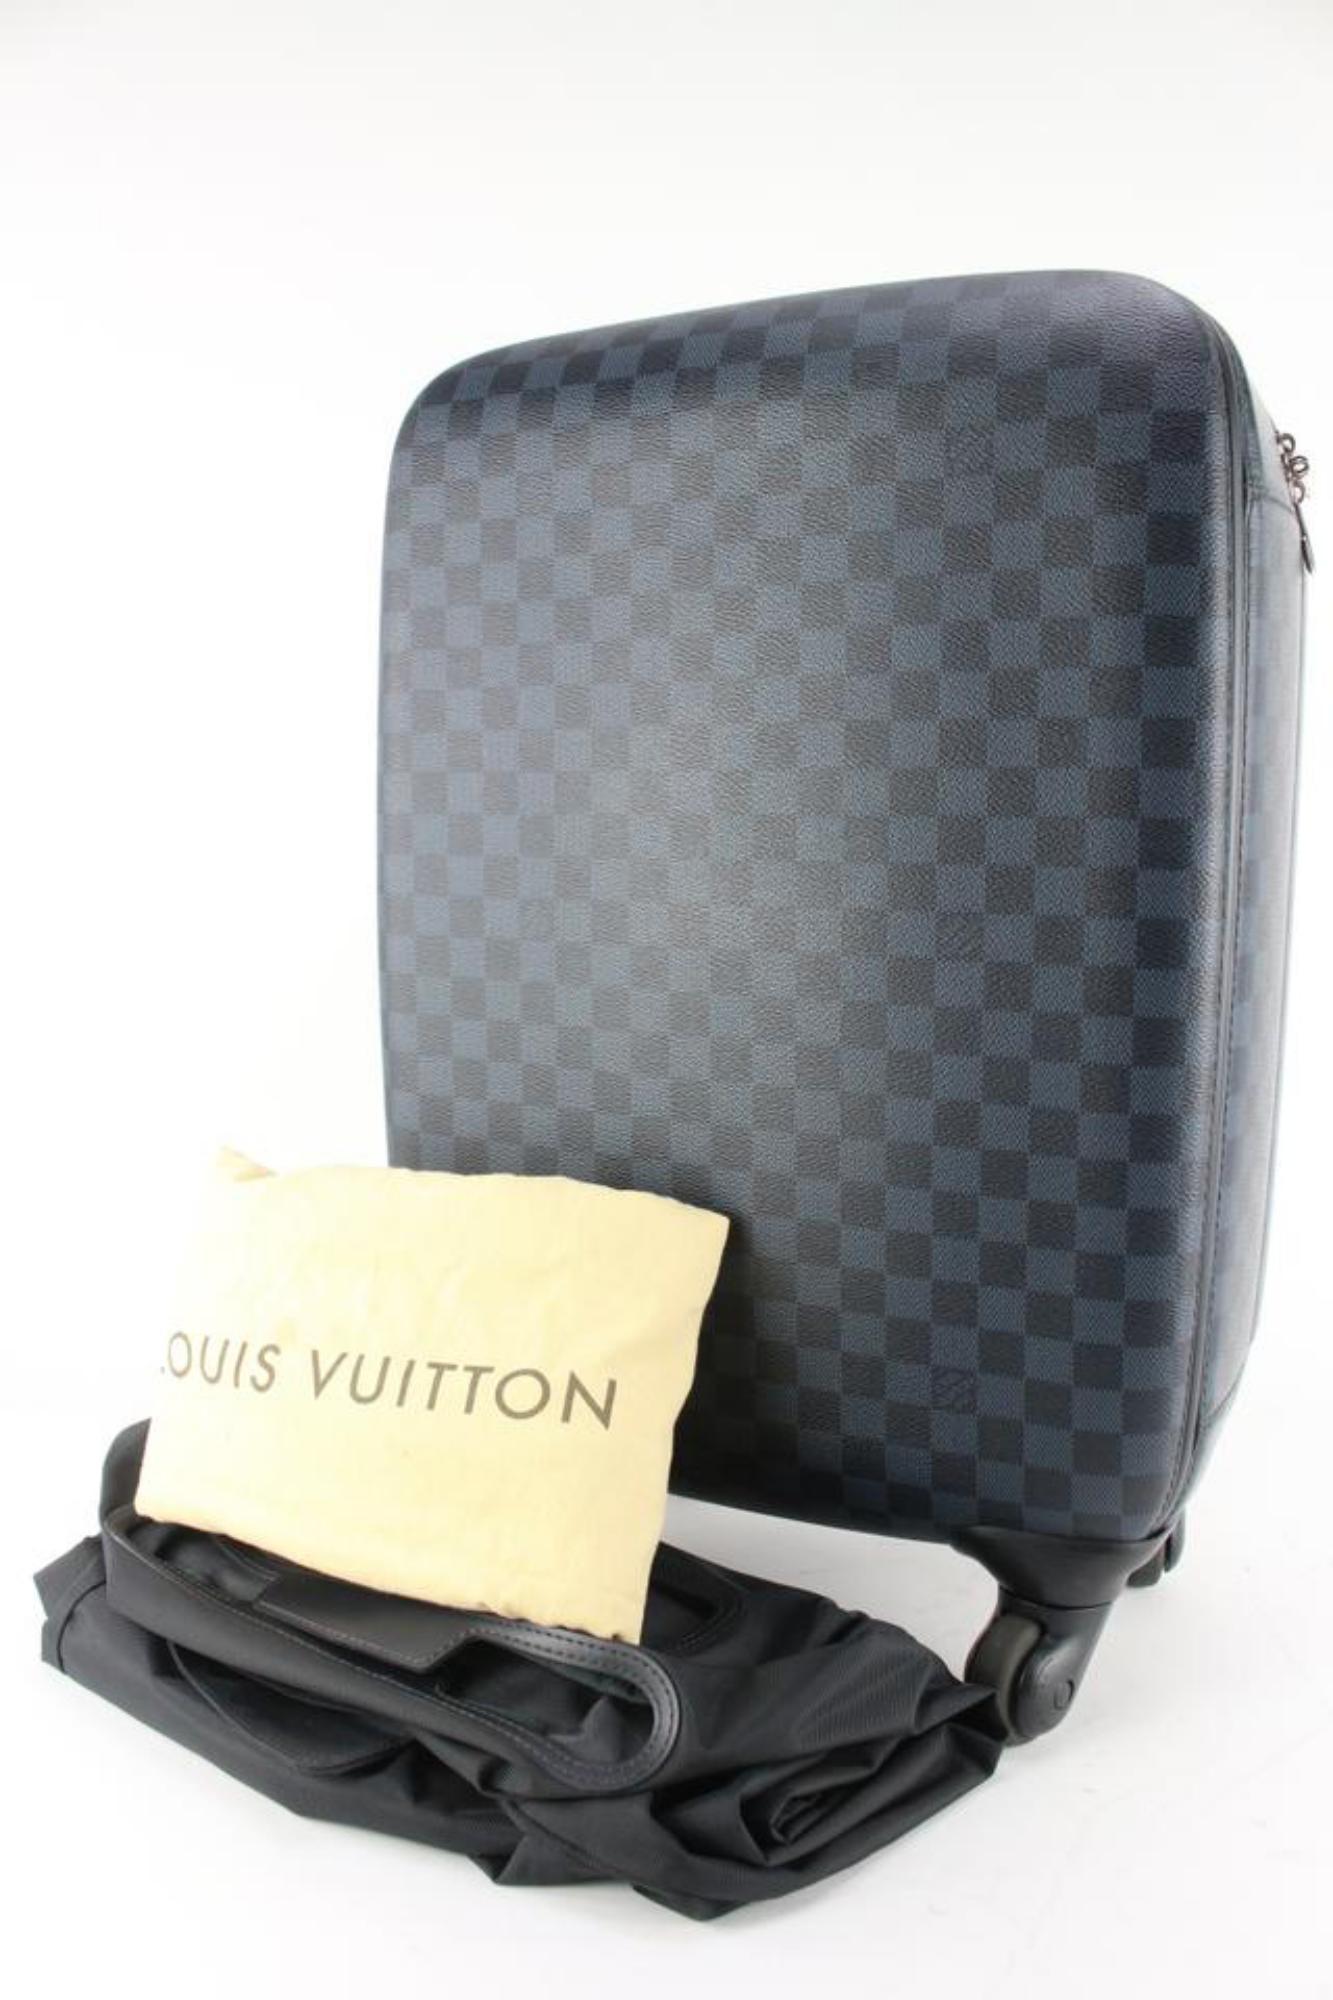 Louis Vuitton Damier Cobalt Zephyr Rolling Luggage Trolley Suitcase 26lz531s For Sale 4